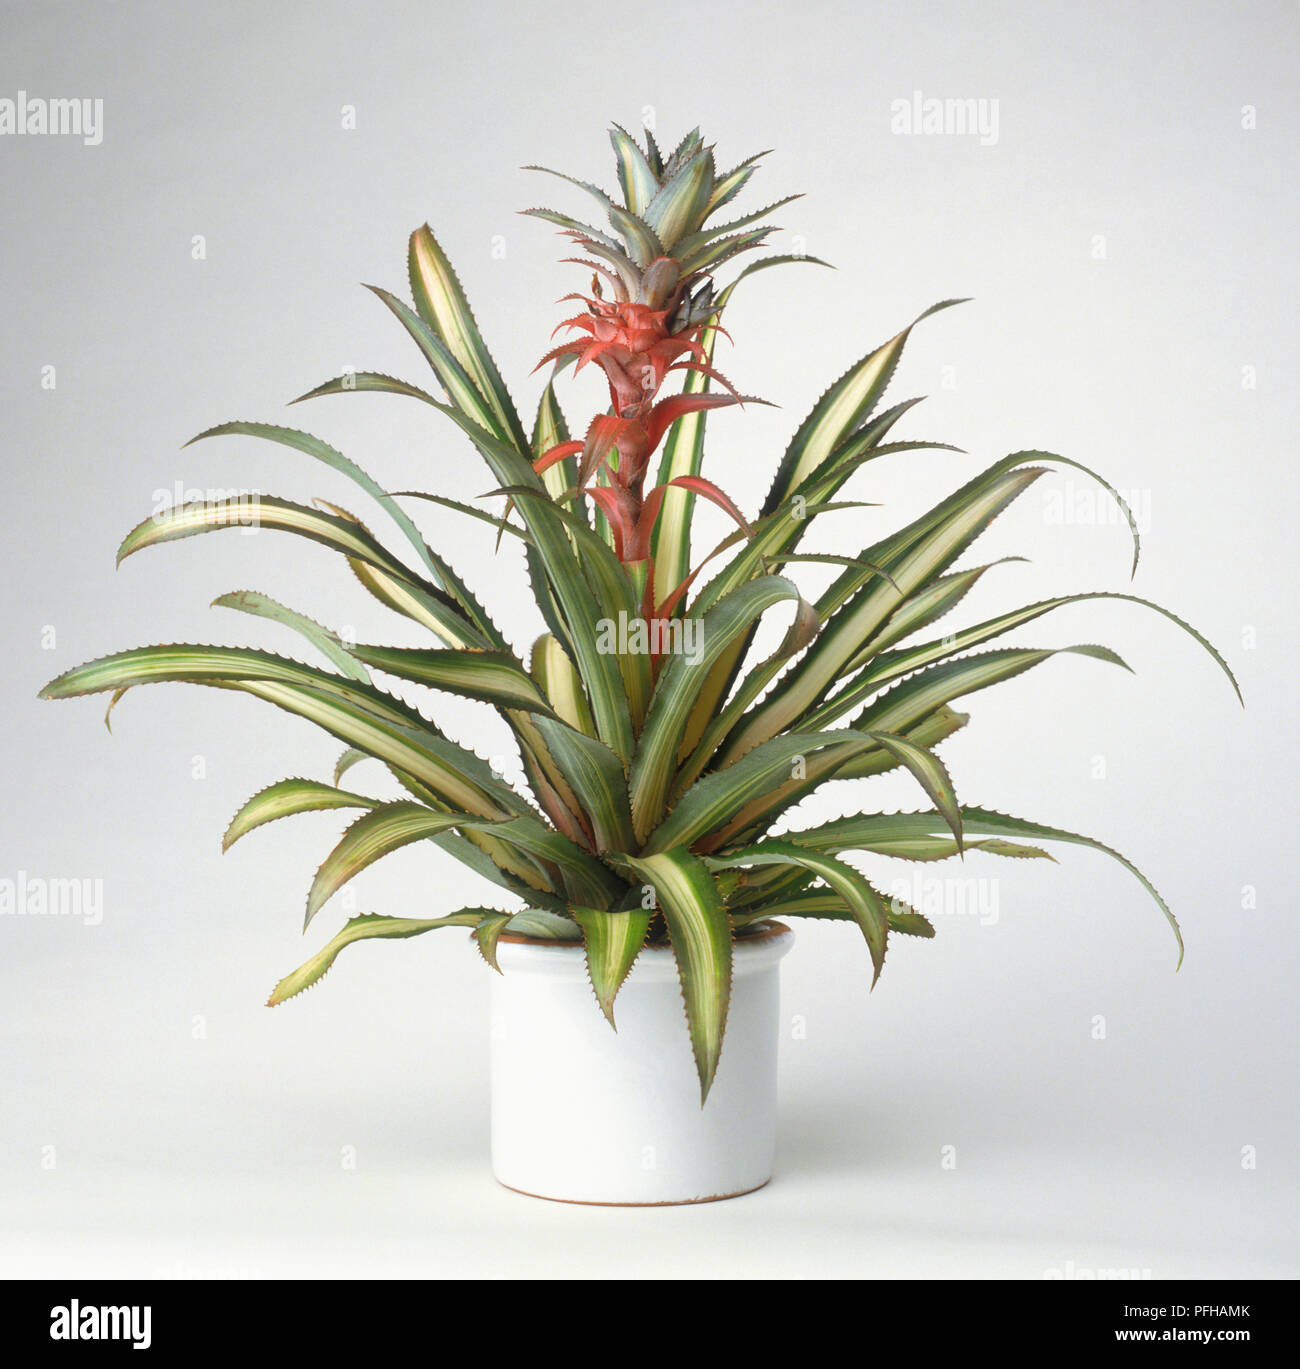 Ananas comosus variegatus (Variegated pineapple) in white ceramic plant pot Stock Photo